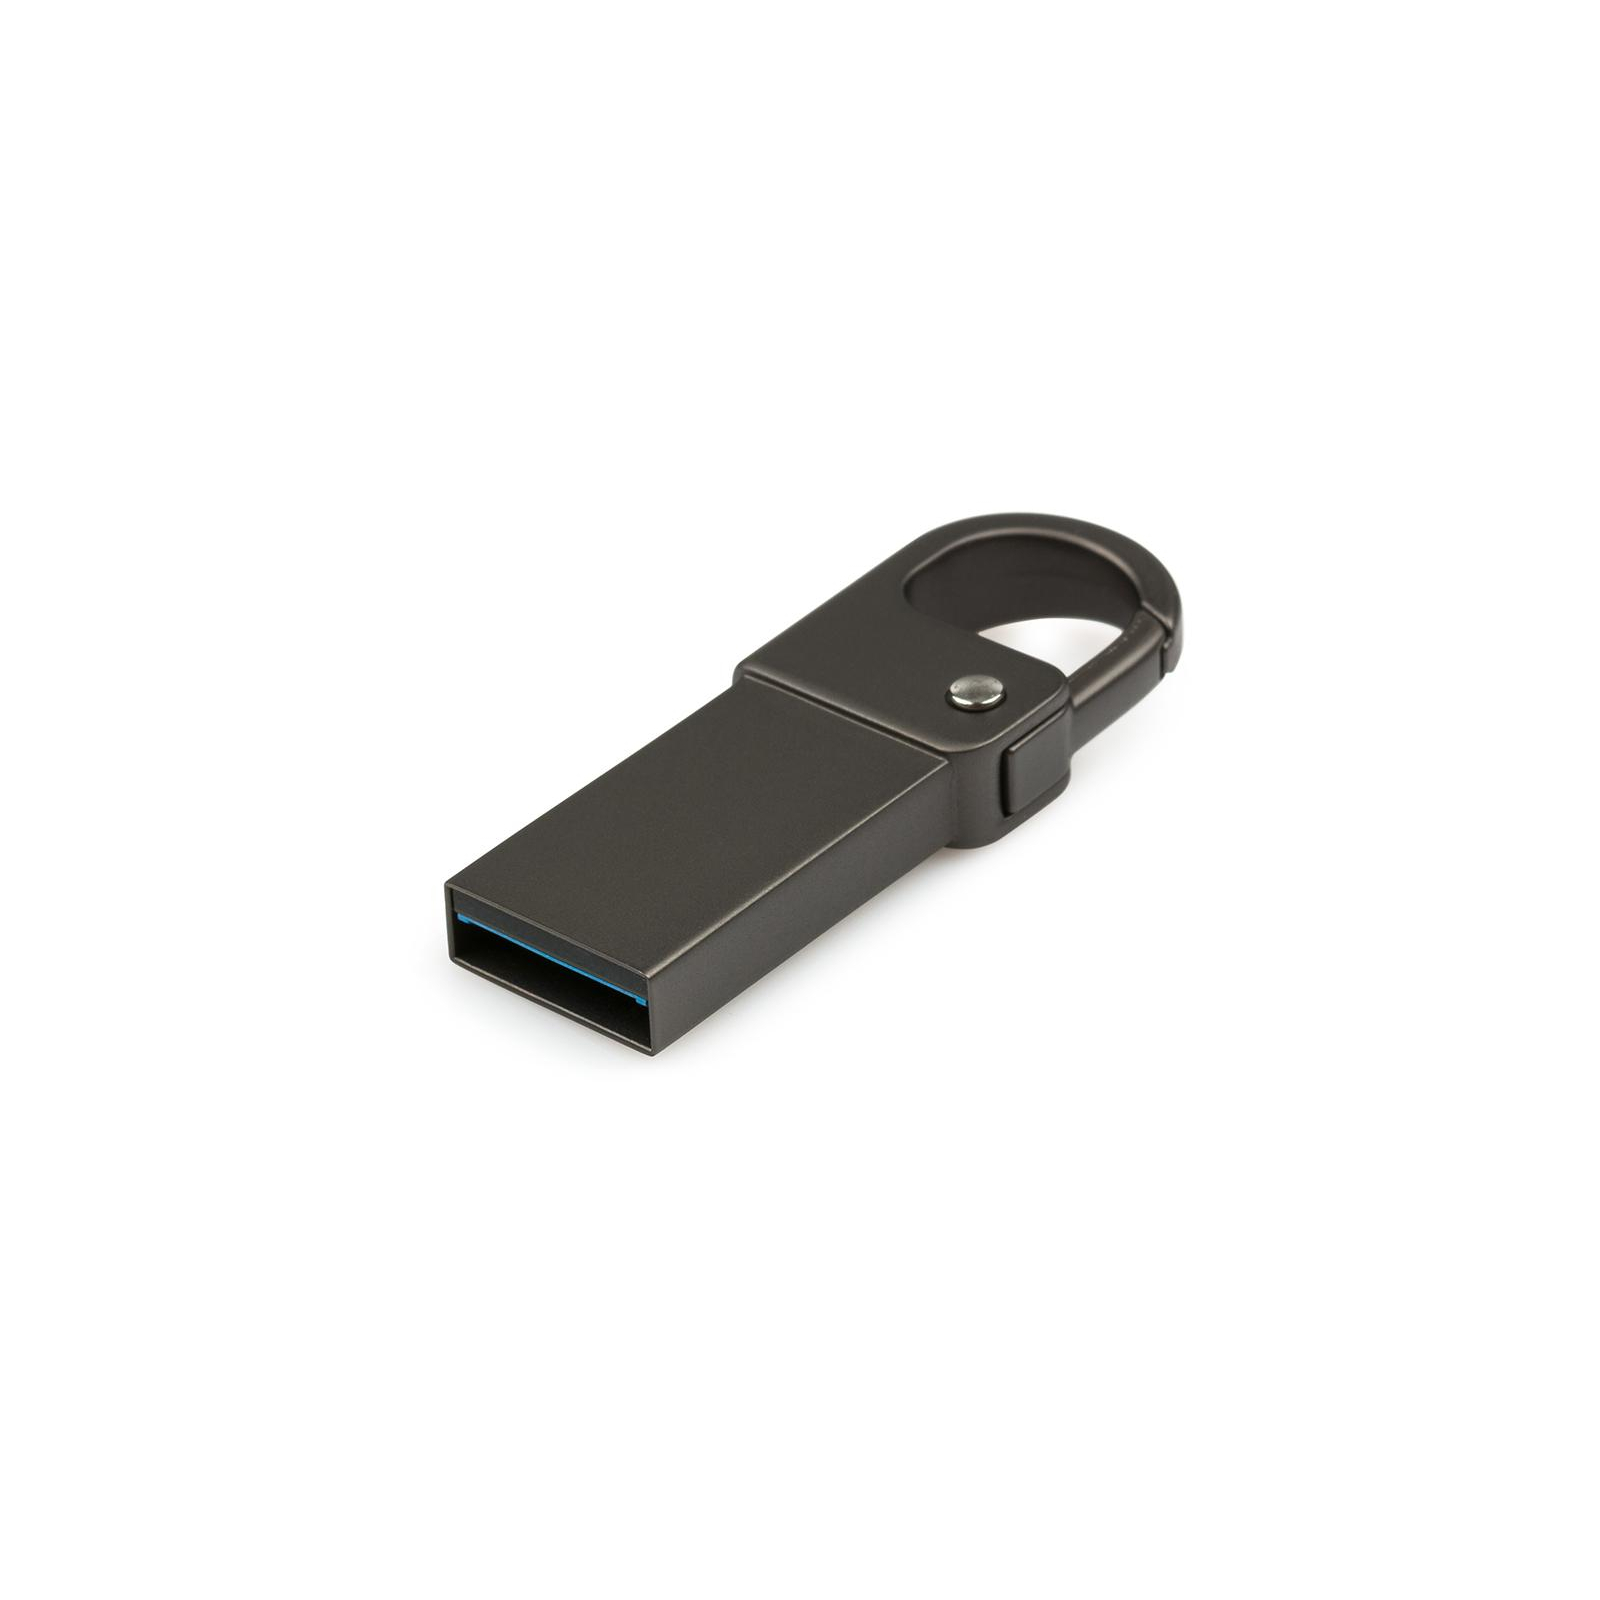 USB флеш накопитель eXceleram 32GB U6M Series Dark USB 3.1 Gen 1 (EXU3U6MD32) изображение 4